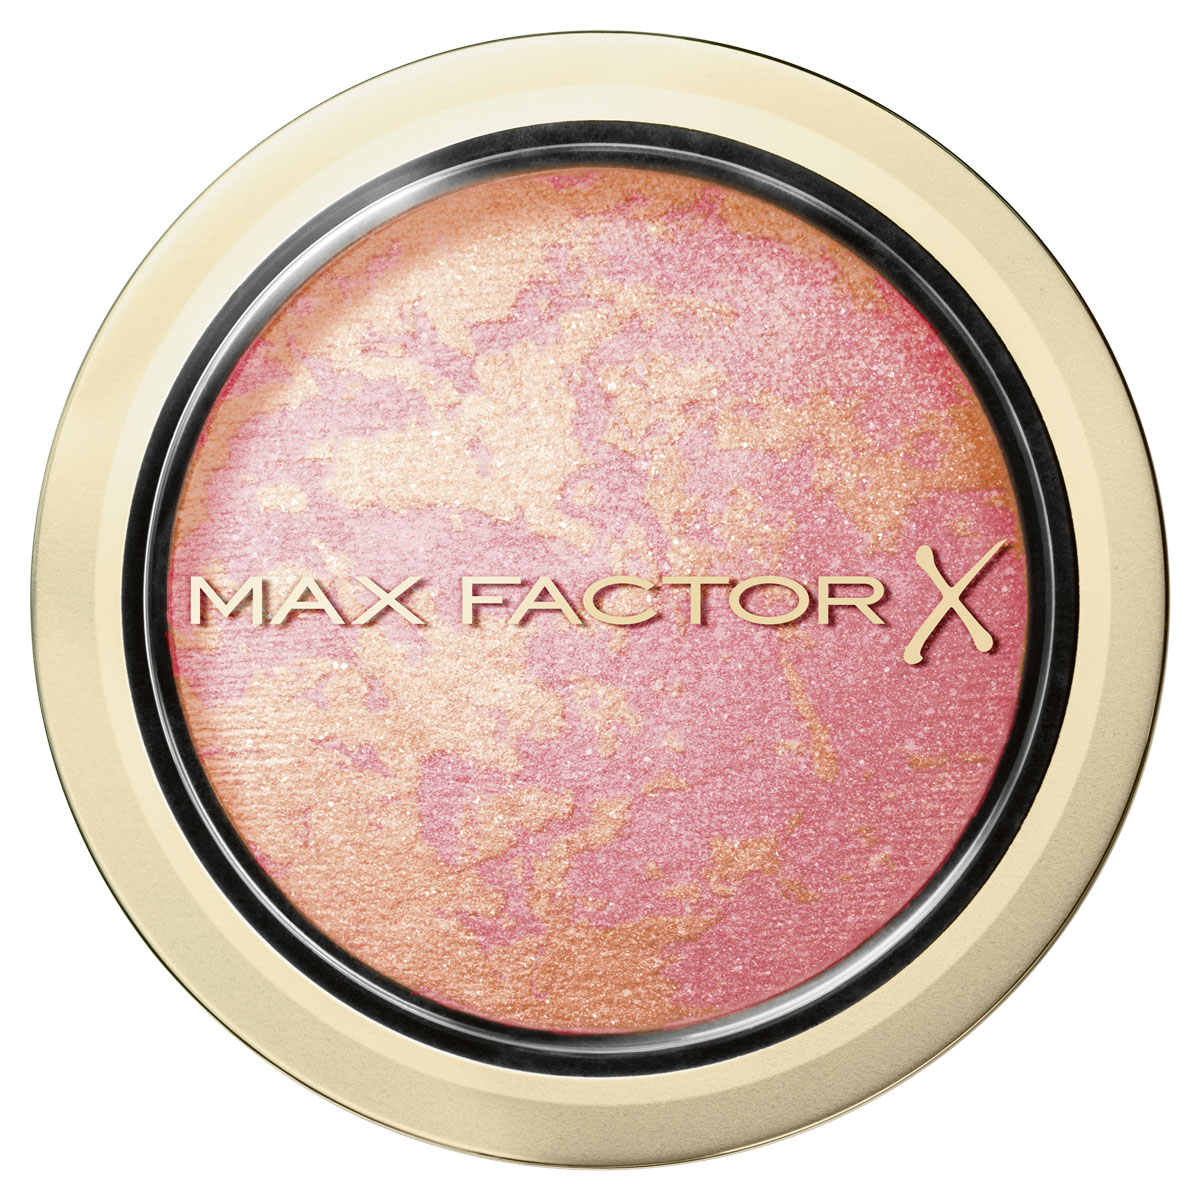 Max Factor Румяна Creme Puff Blush, тон 05 Lovely Pink